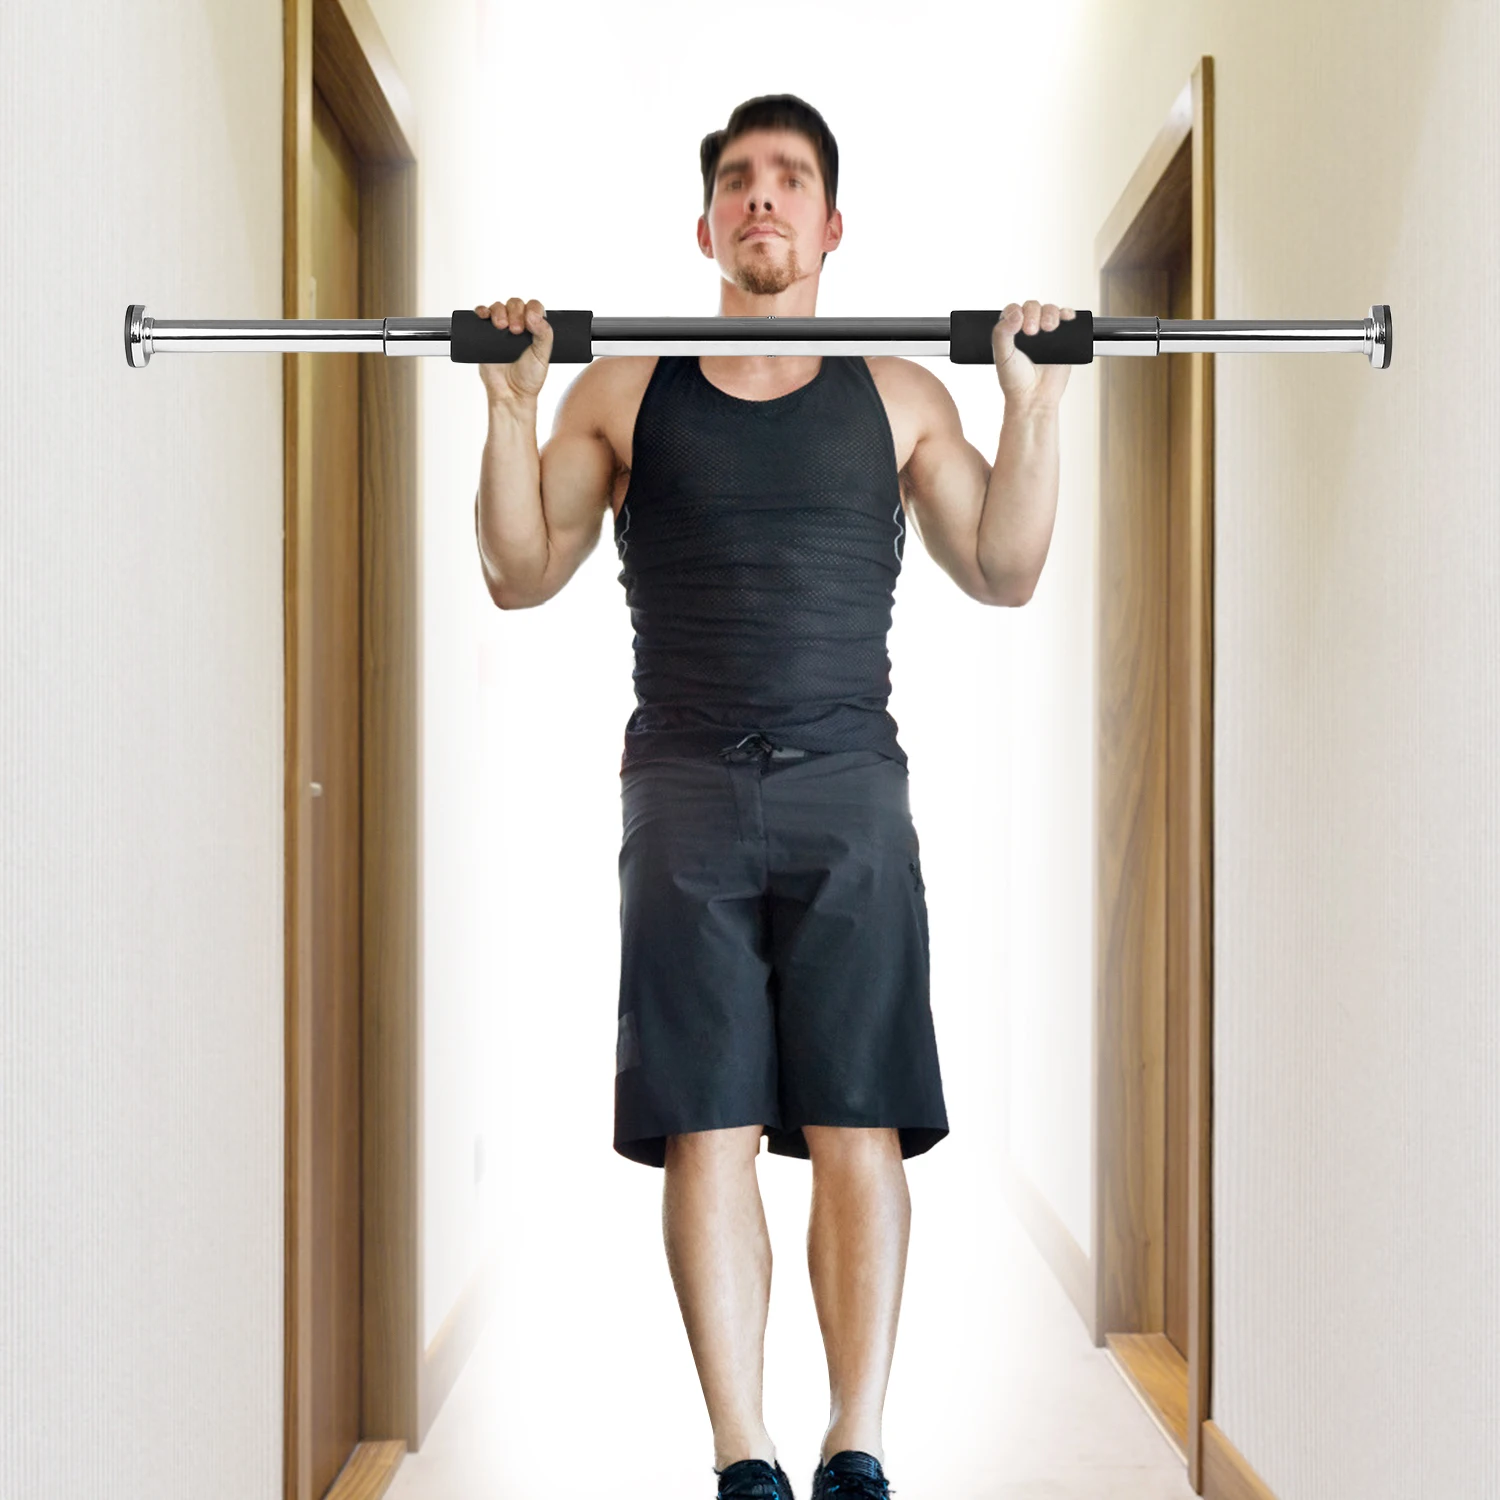 Adjustable Doorway Pull Up Bar Fitness Door Way Chin Up Home Gym Exercise Tool